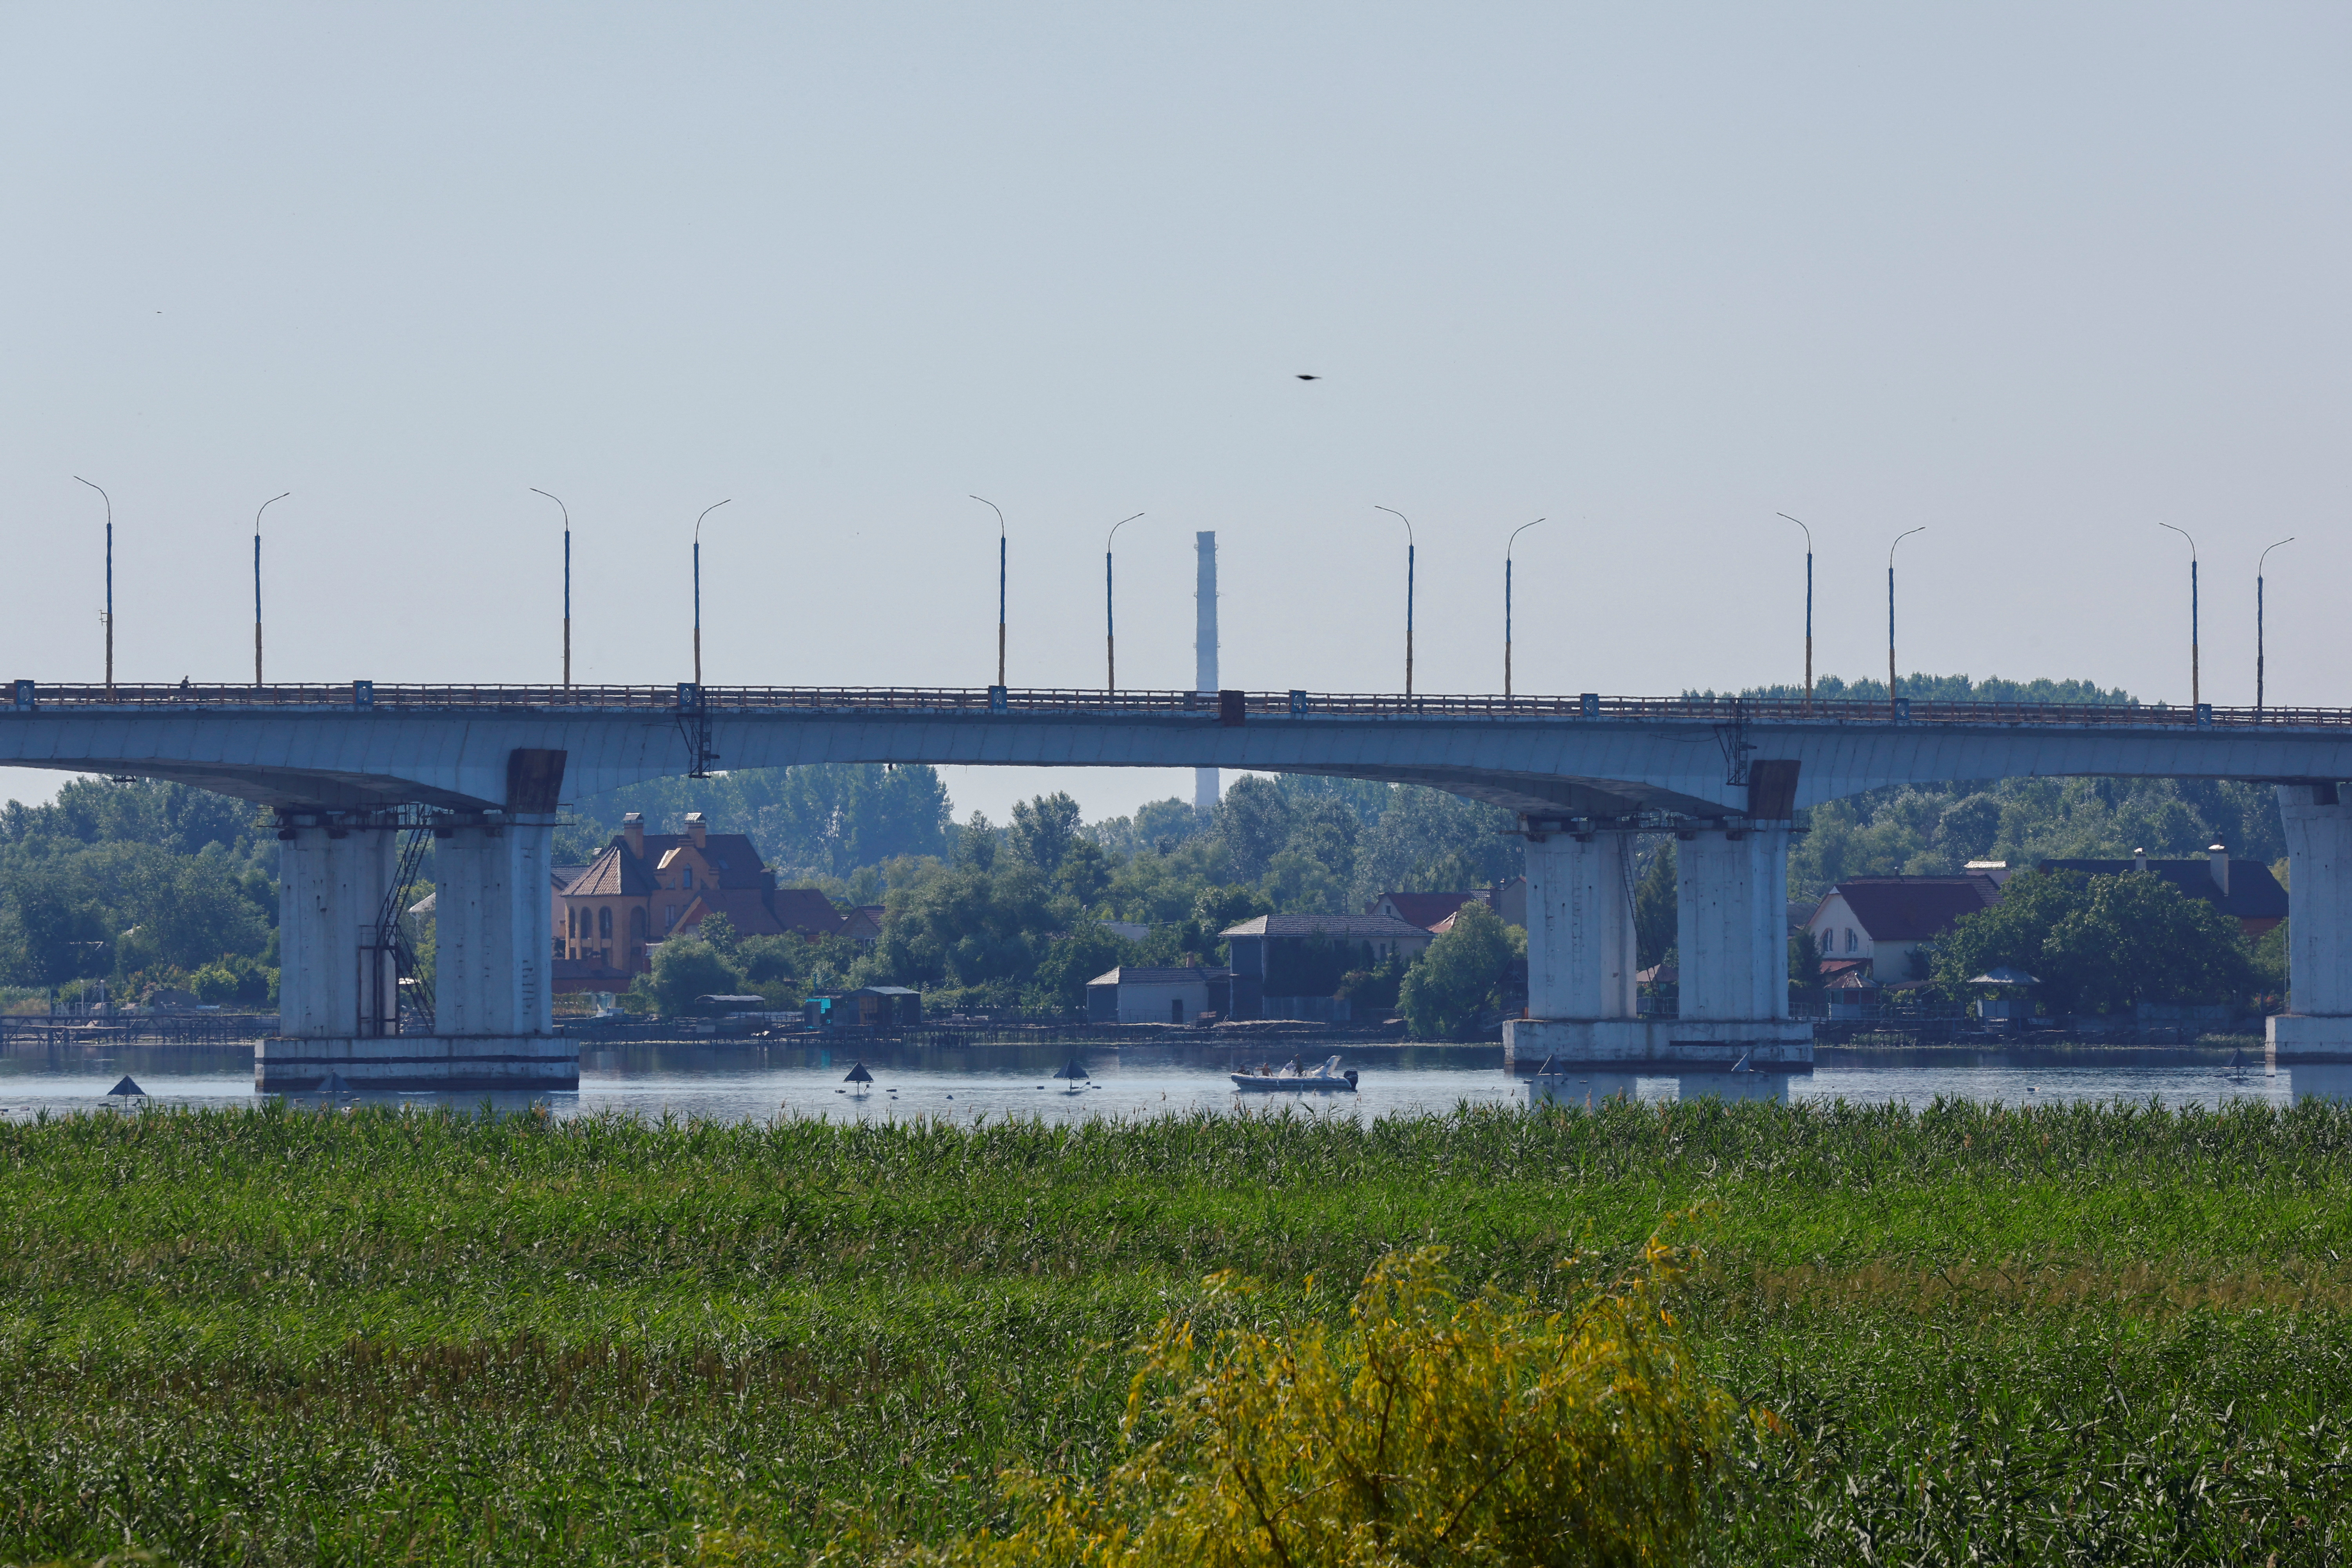 A view shows the Antonivskyi bridge in Kherson